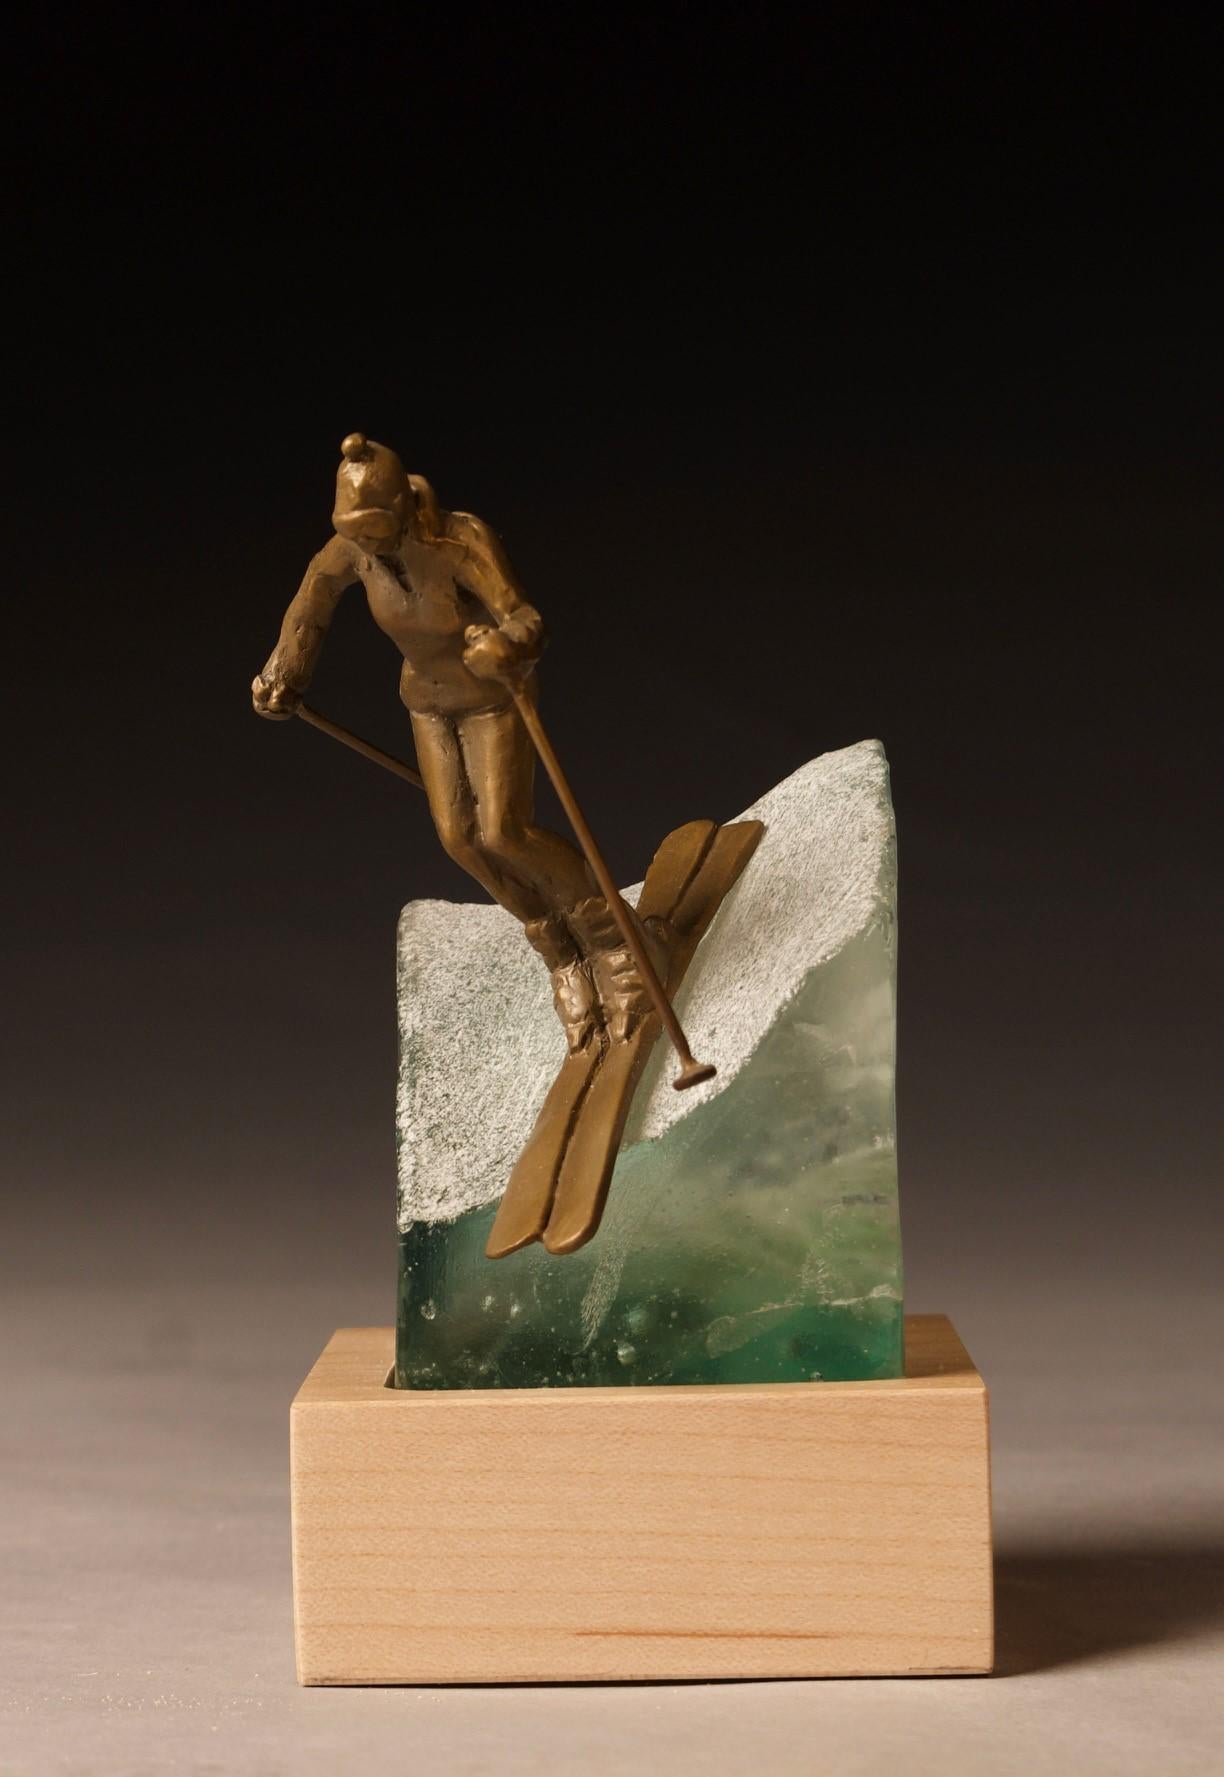 Carver 6x3x3" bronze/glass sculpture